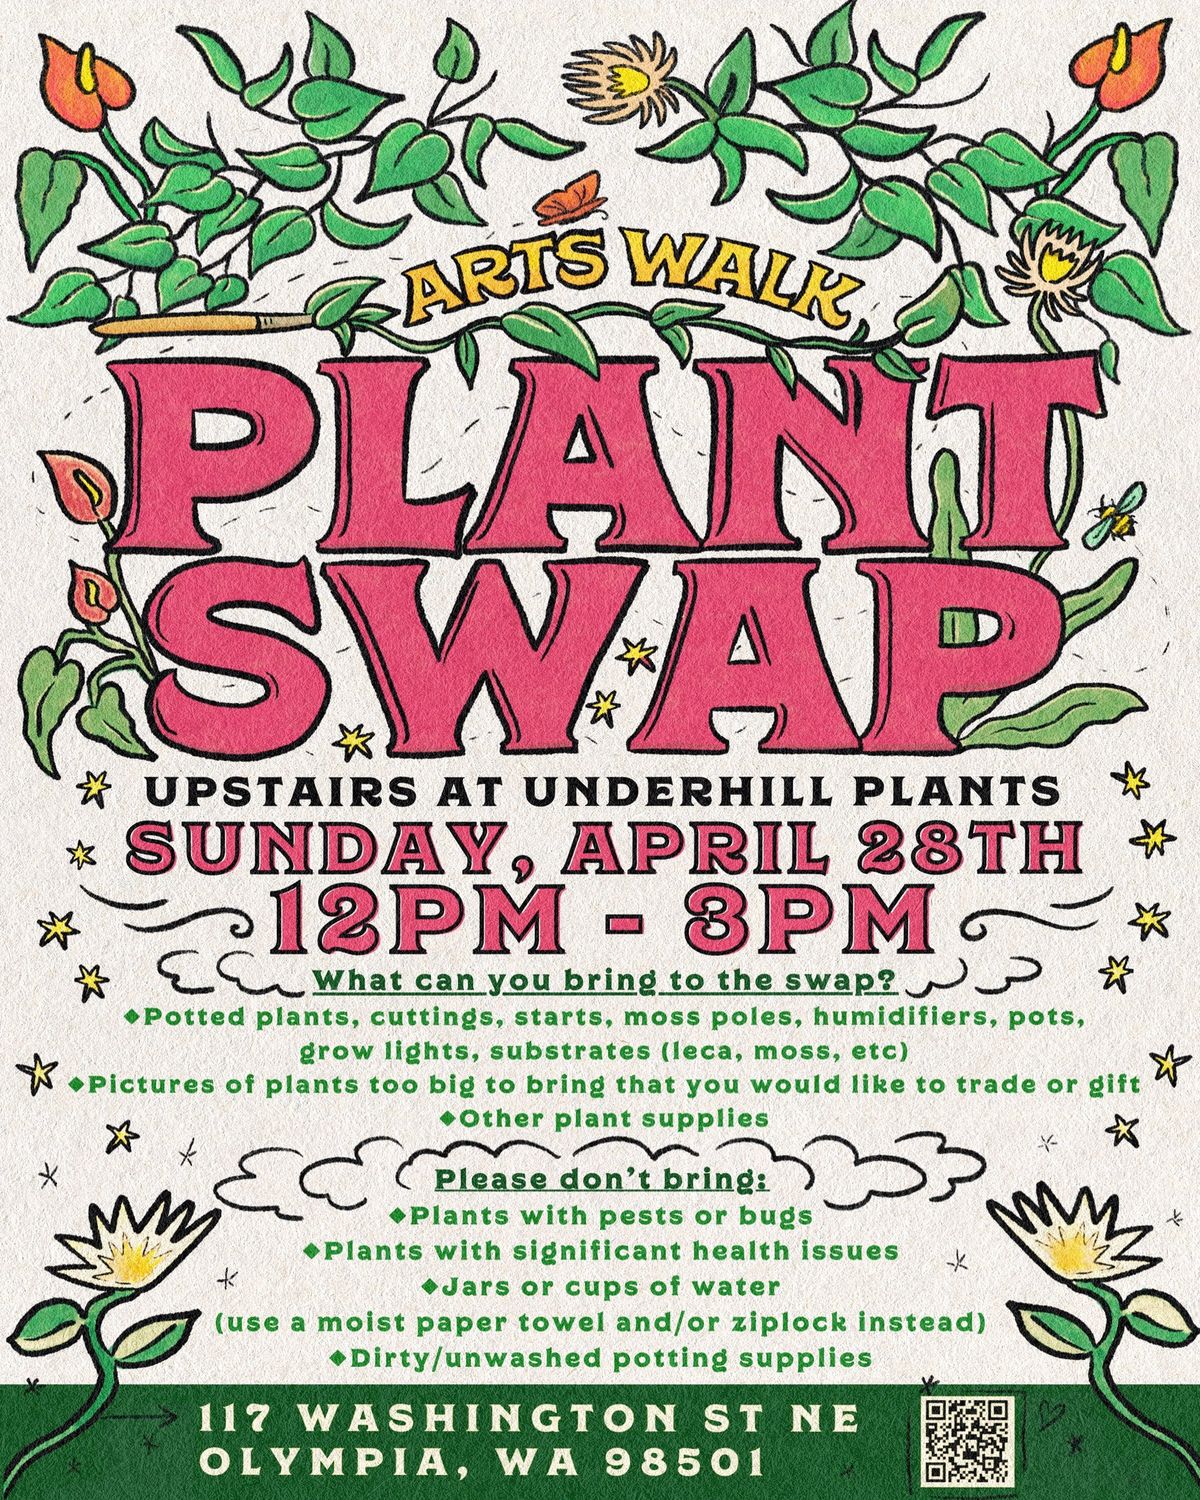 Arts Walk Plant Swap